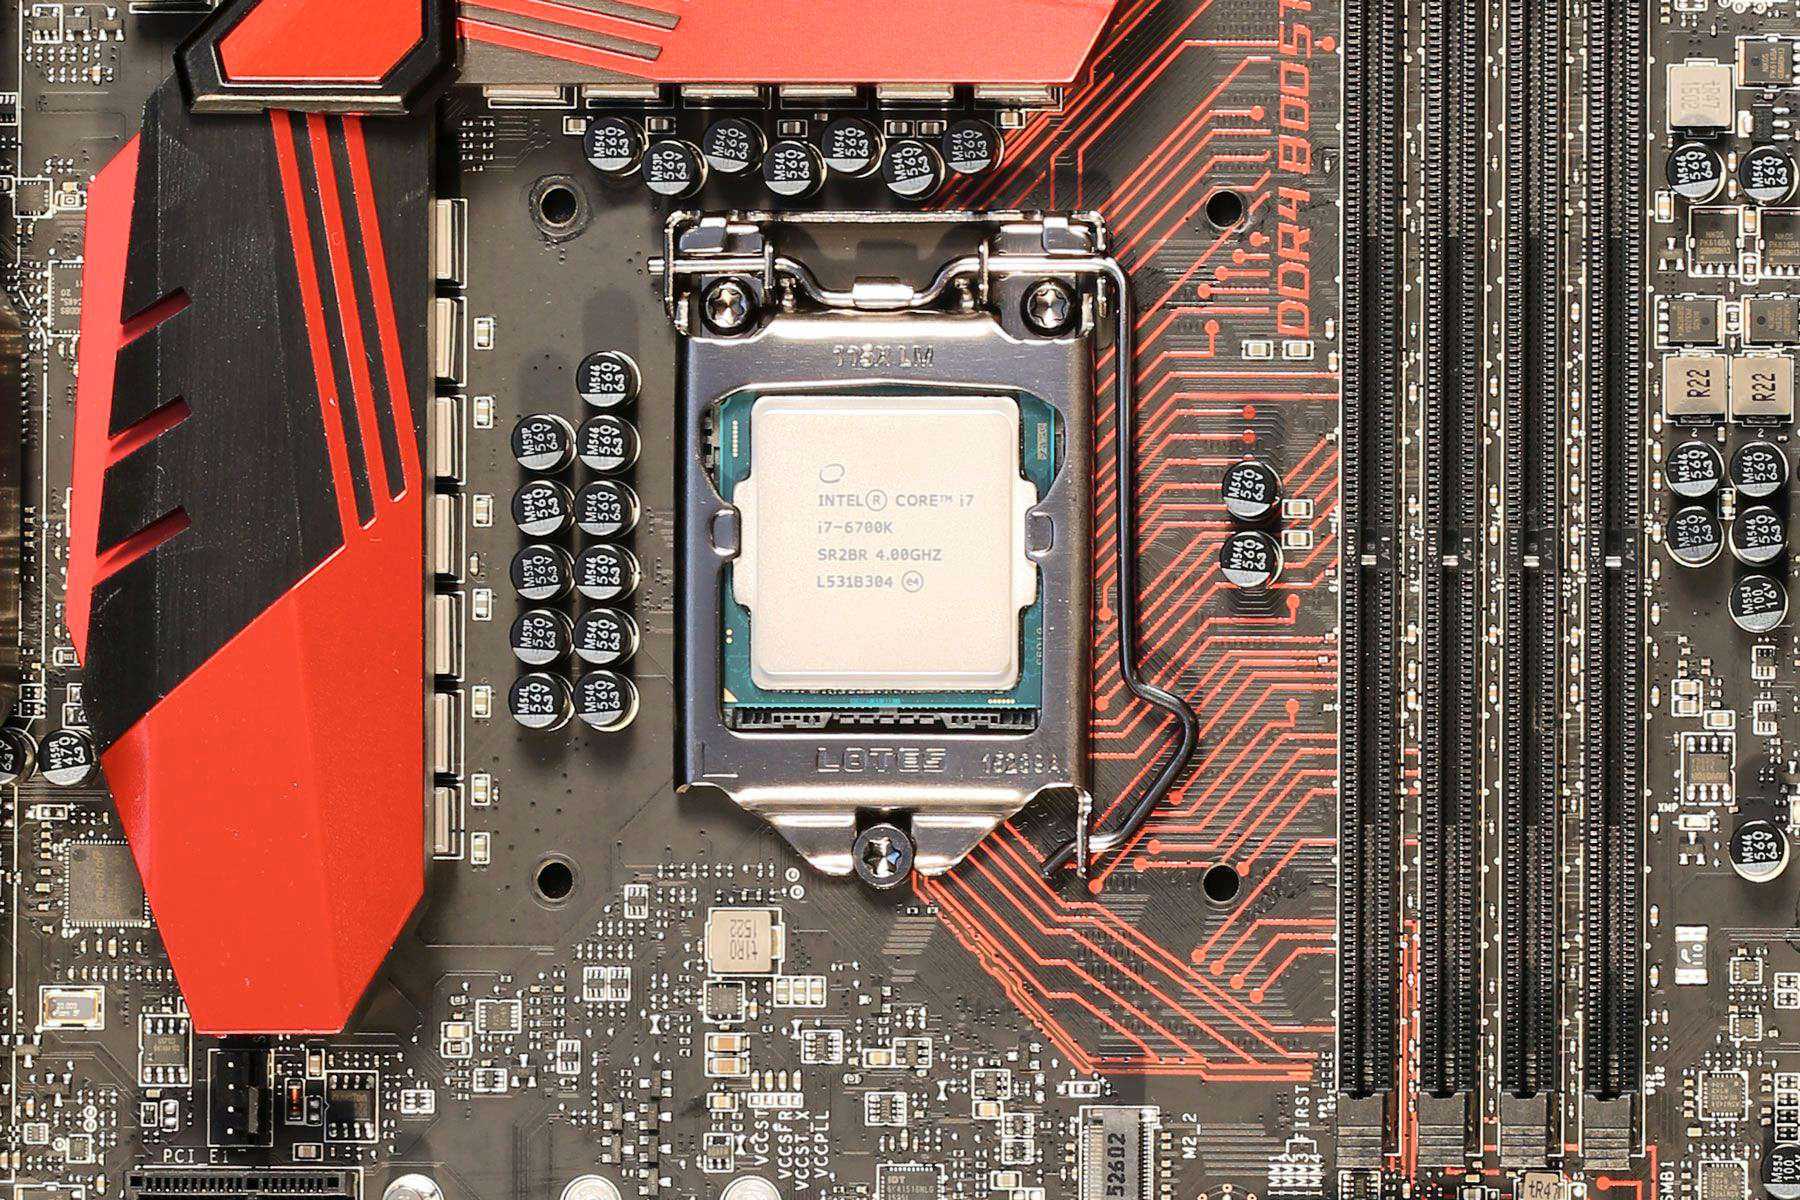 Intel core i7 6700hq vs intel core i7 4700mq